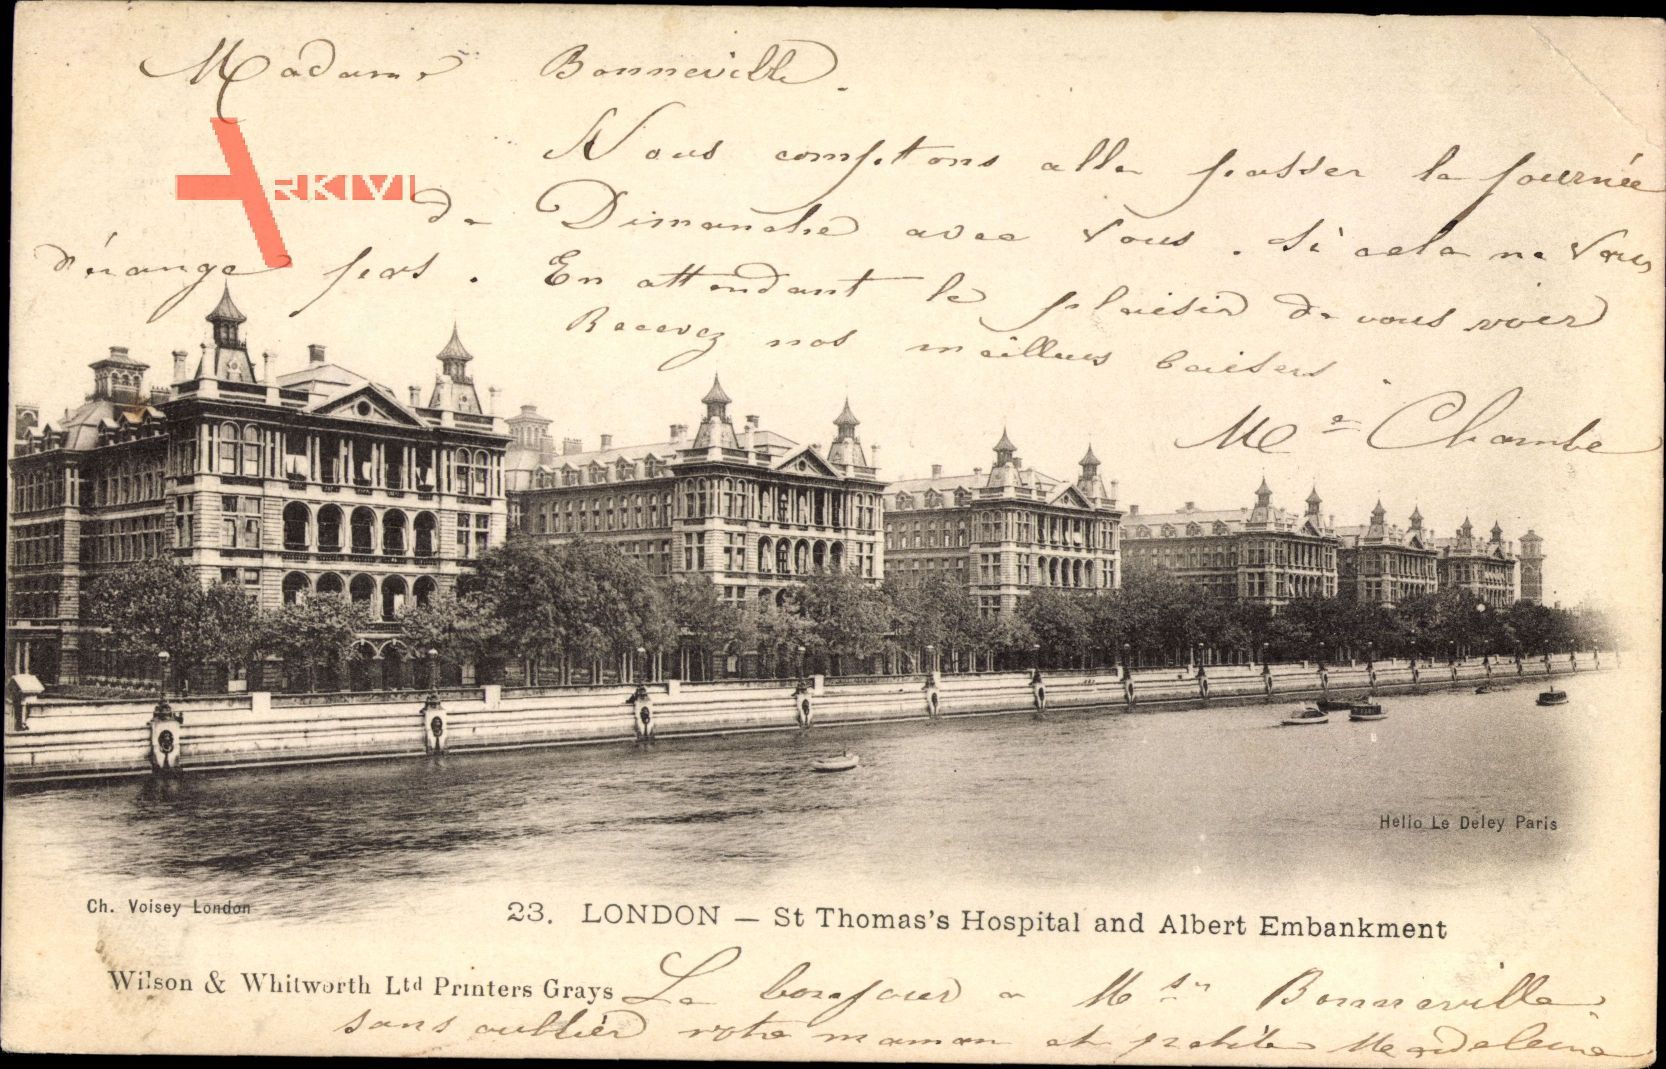 London City, St. Thoma's Hospital and Albert Embankment